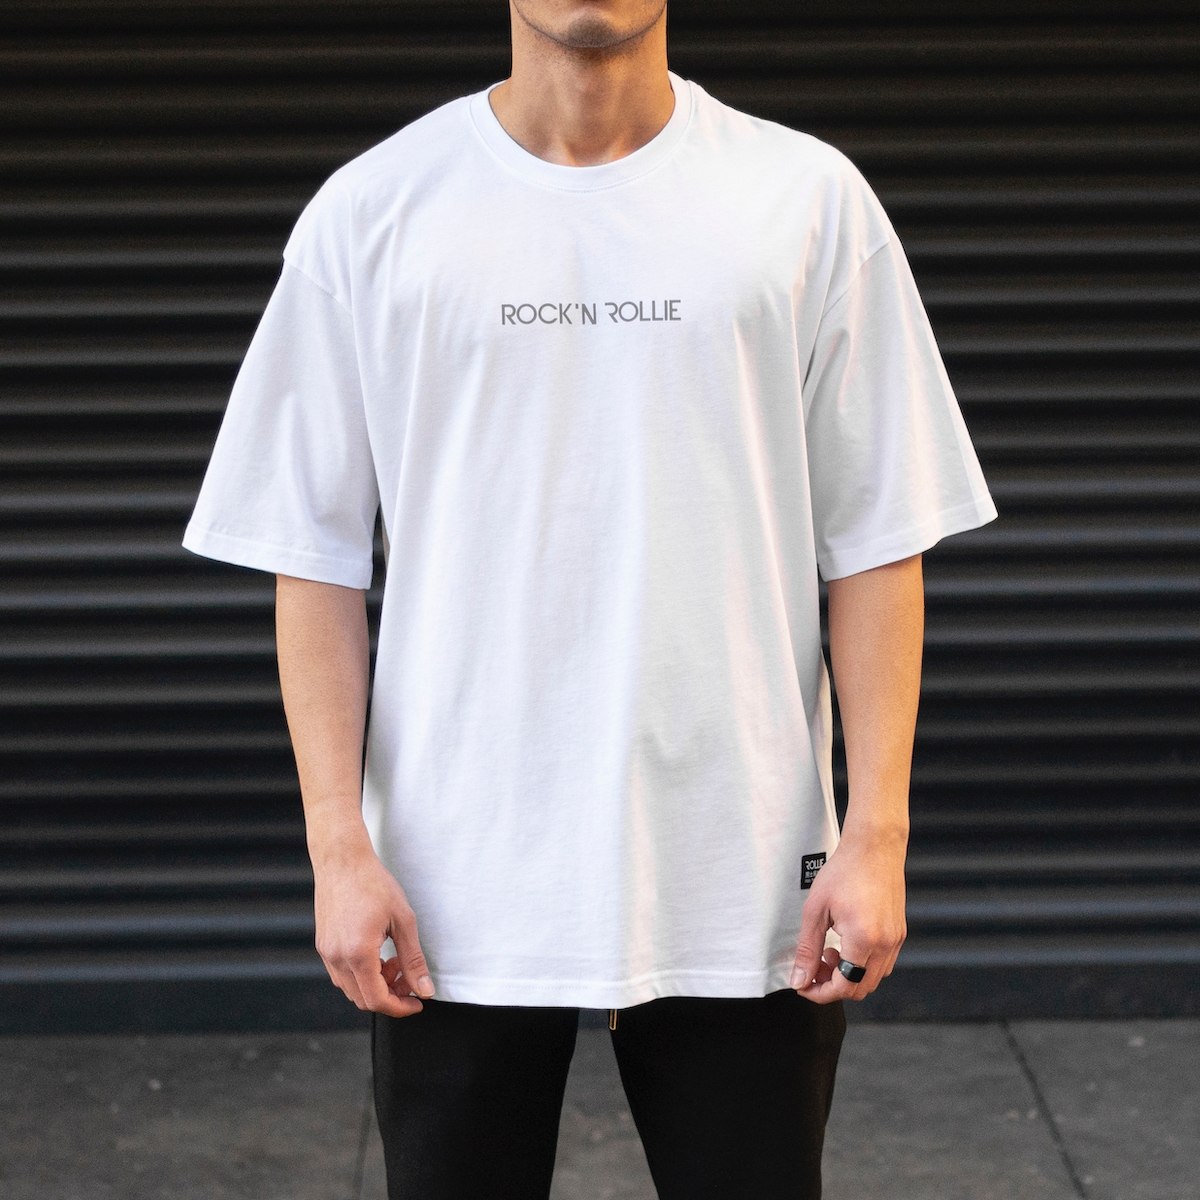 Men's Oversize T-Shirt Basic Neck Text Printed White